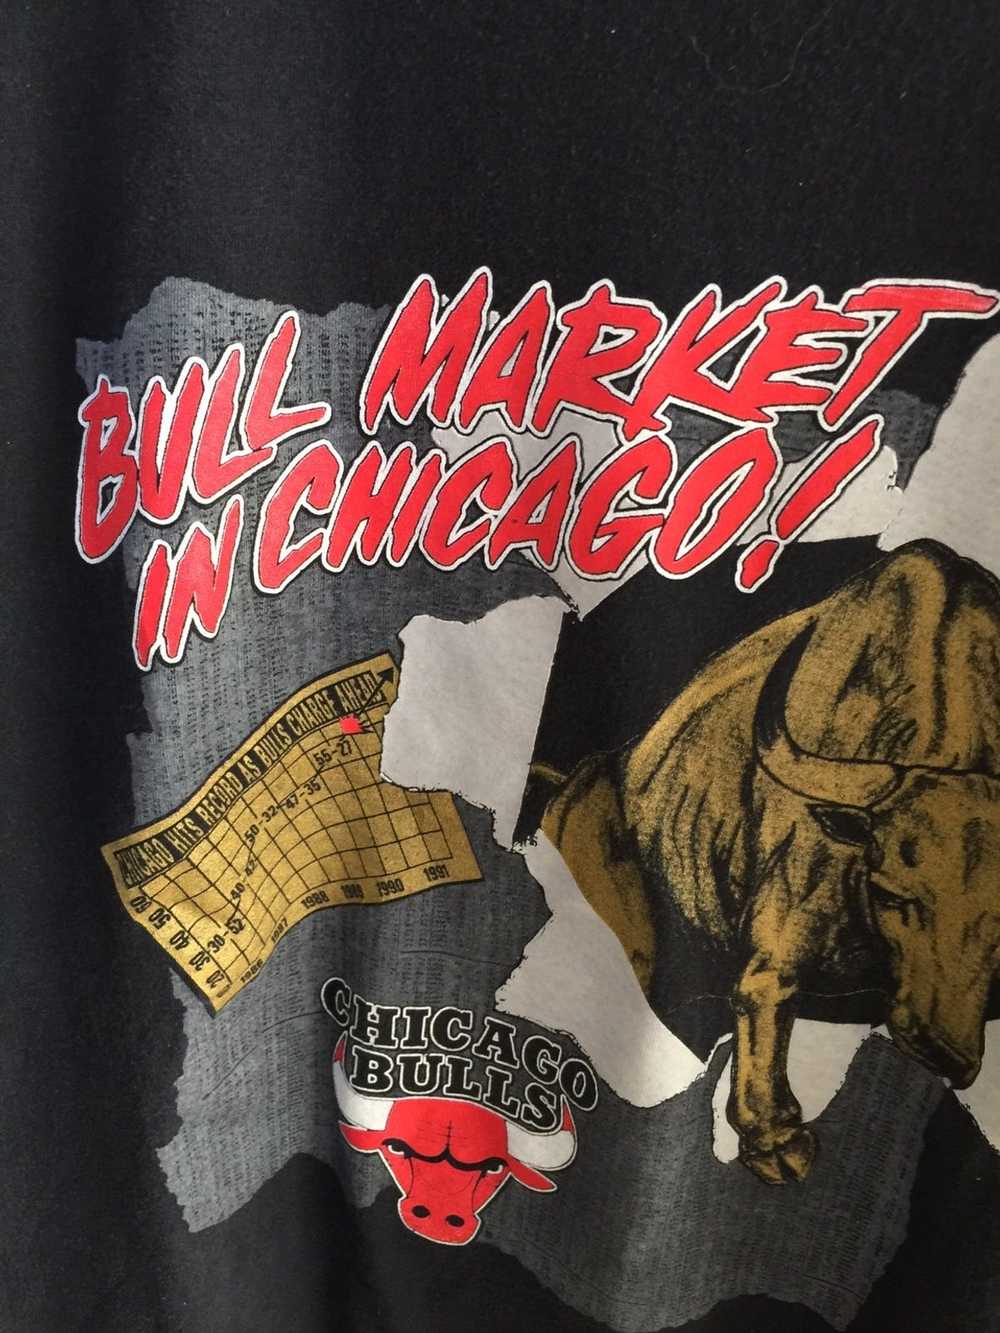 Vintage NBA (Nutmeg) - Chicago Bulls NBA World Champions T-Shirt 1991 X-Large